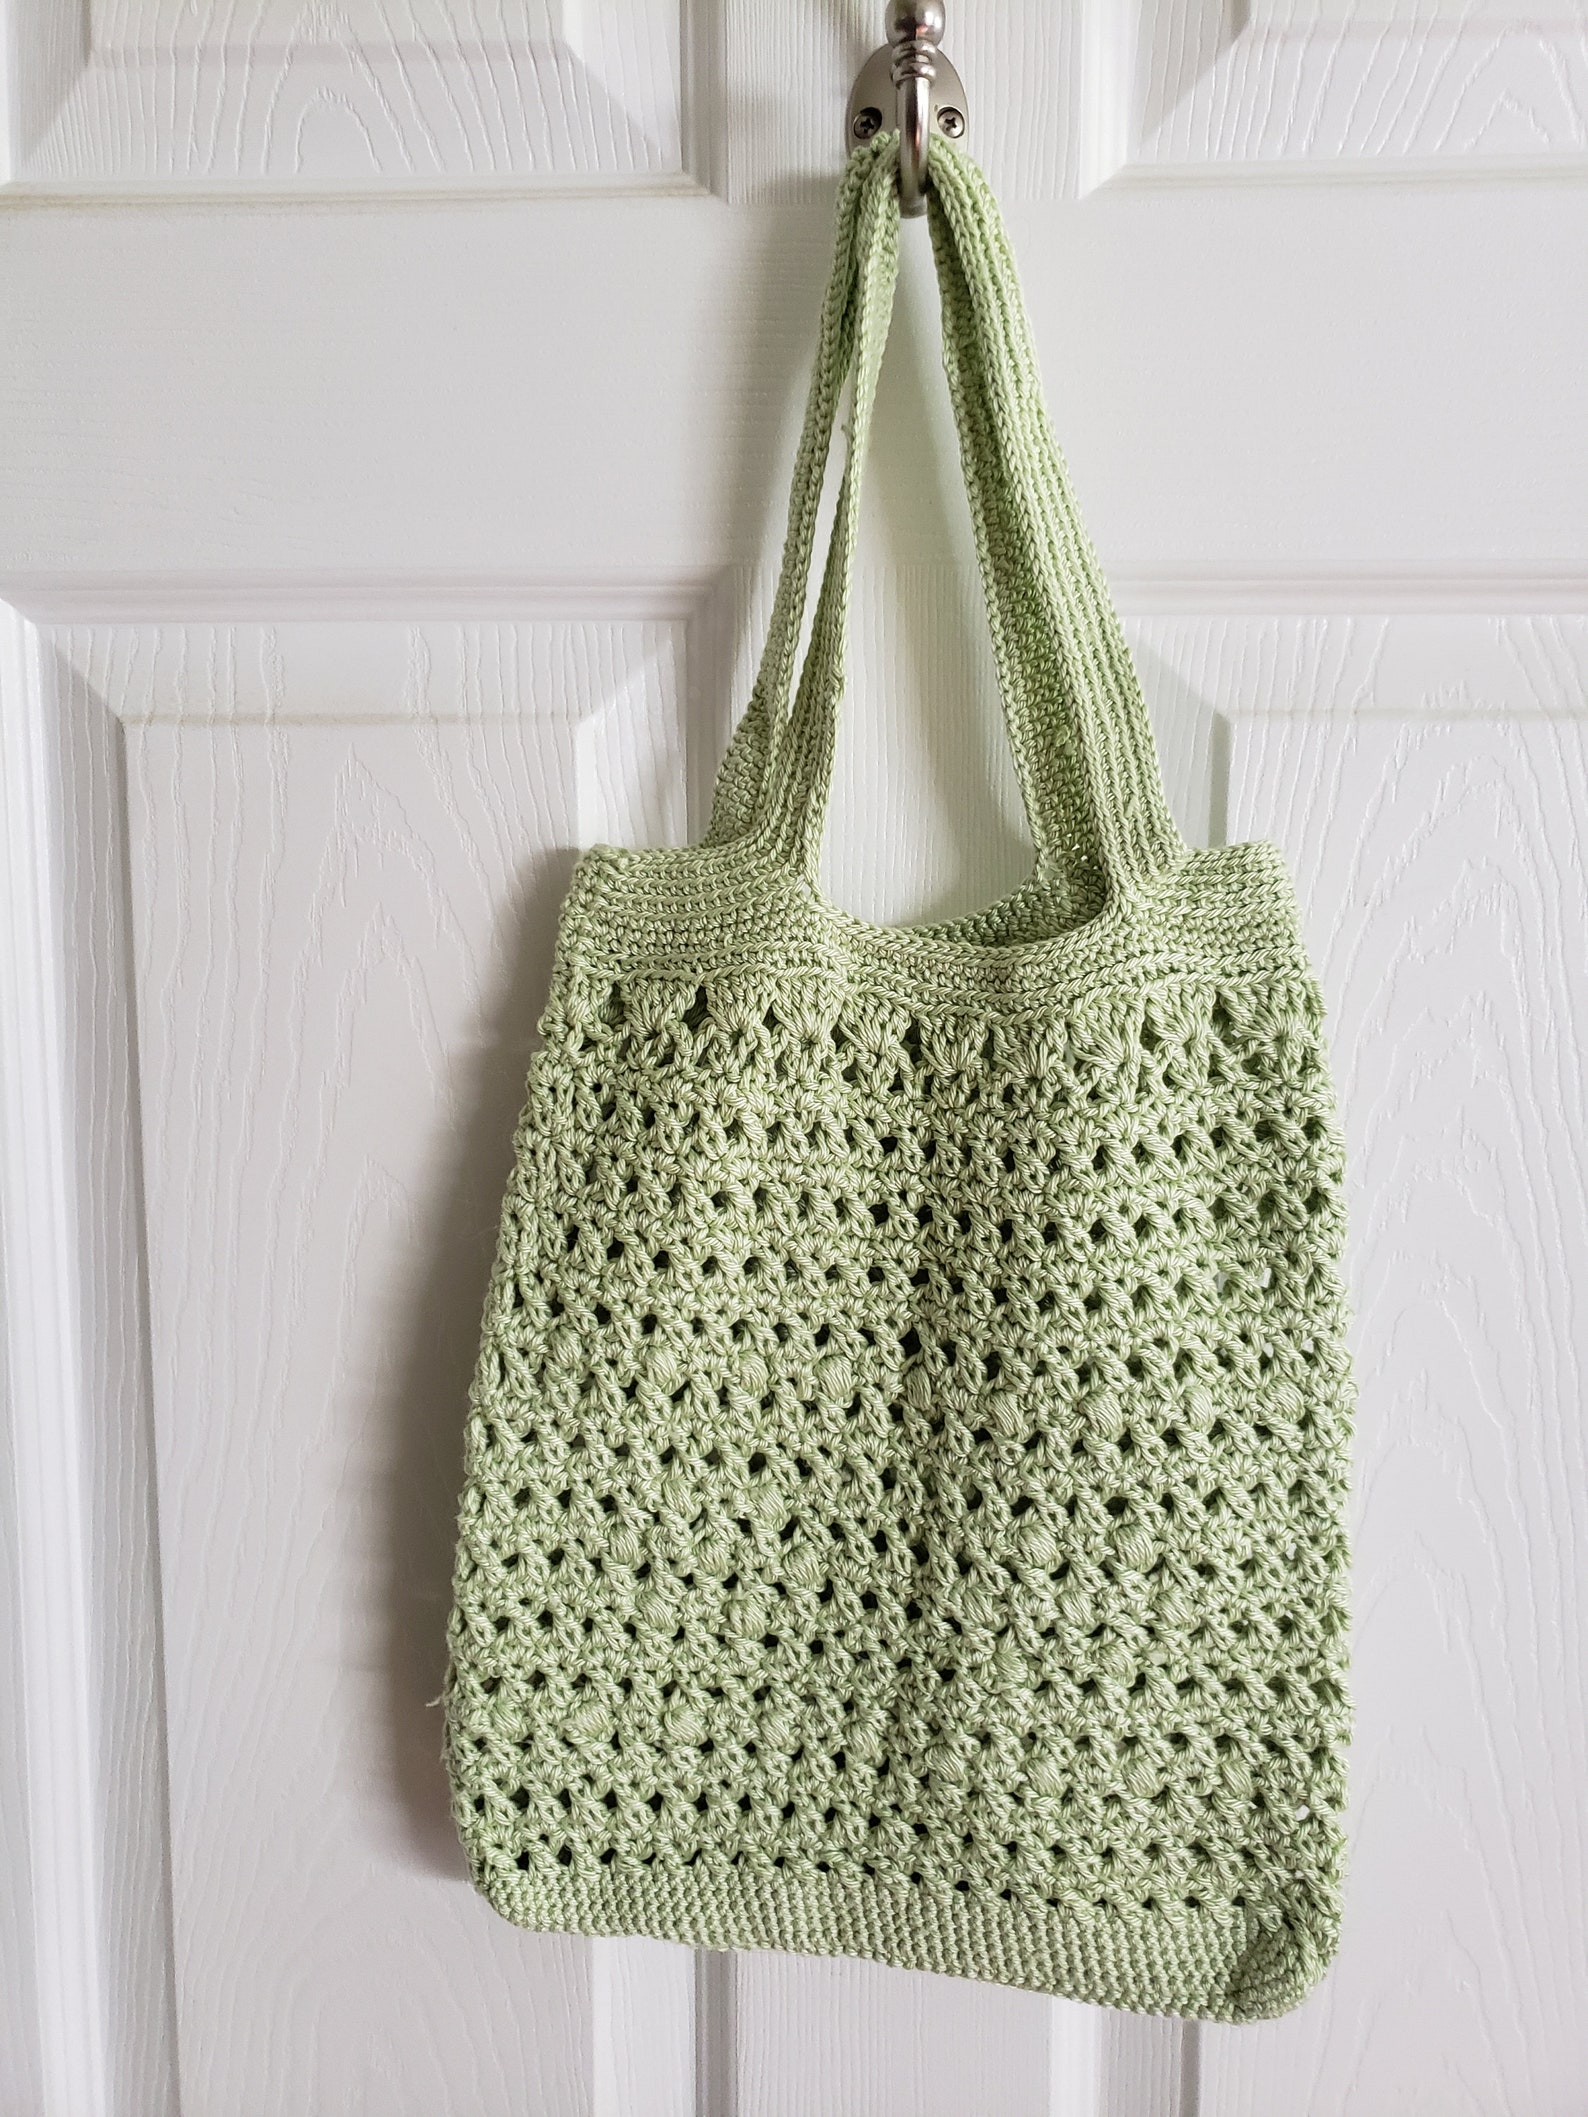 Crochet Tote Bag Free Pattern ~ Drawstring Bag Pattern By Barbara ...